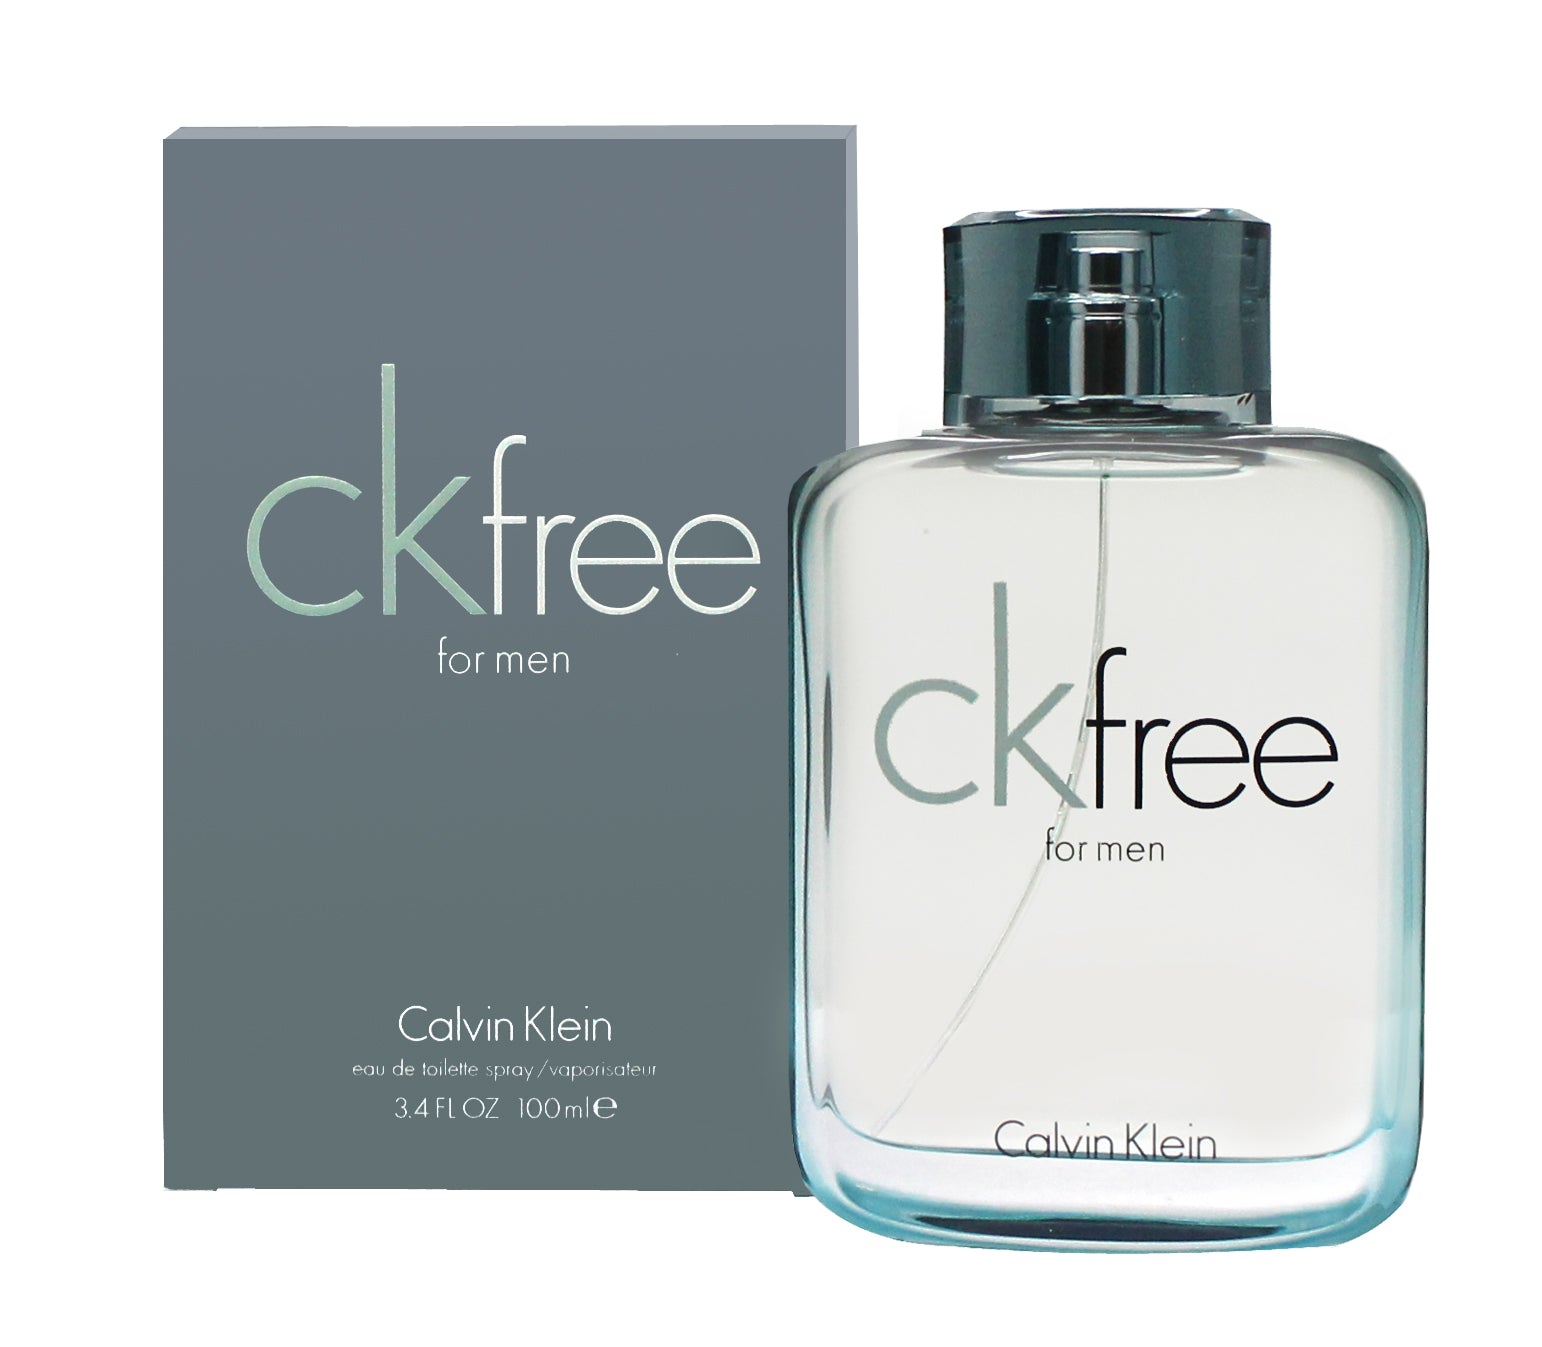 View Calvin Klein CK Free Eau De Toilette 100ml Sprej information